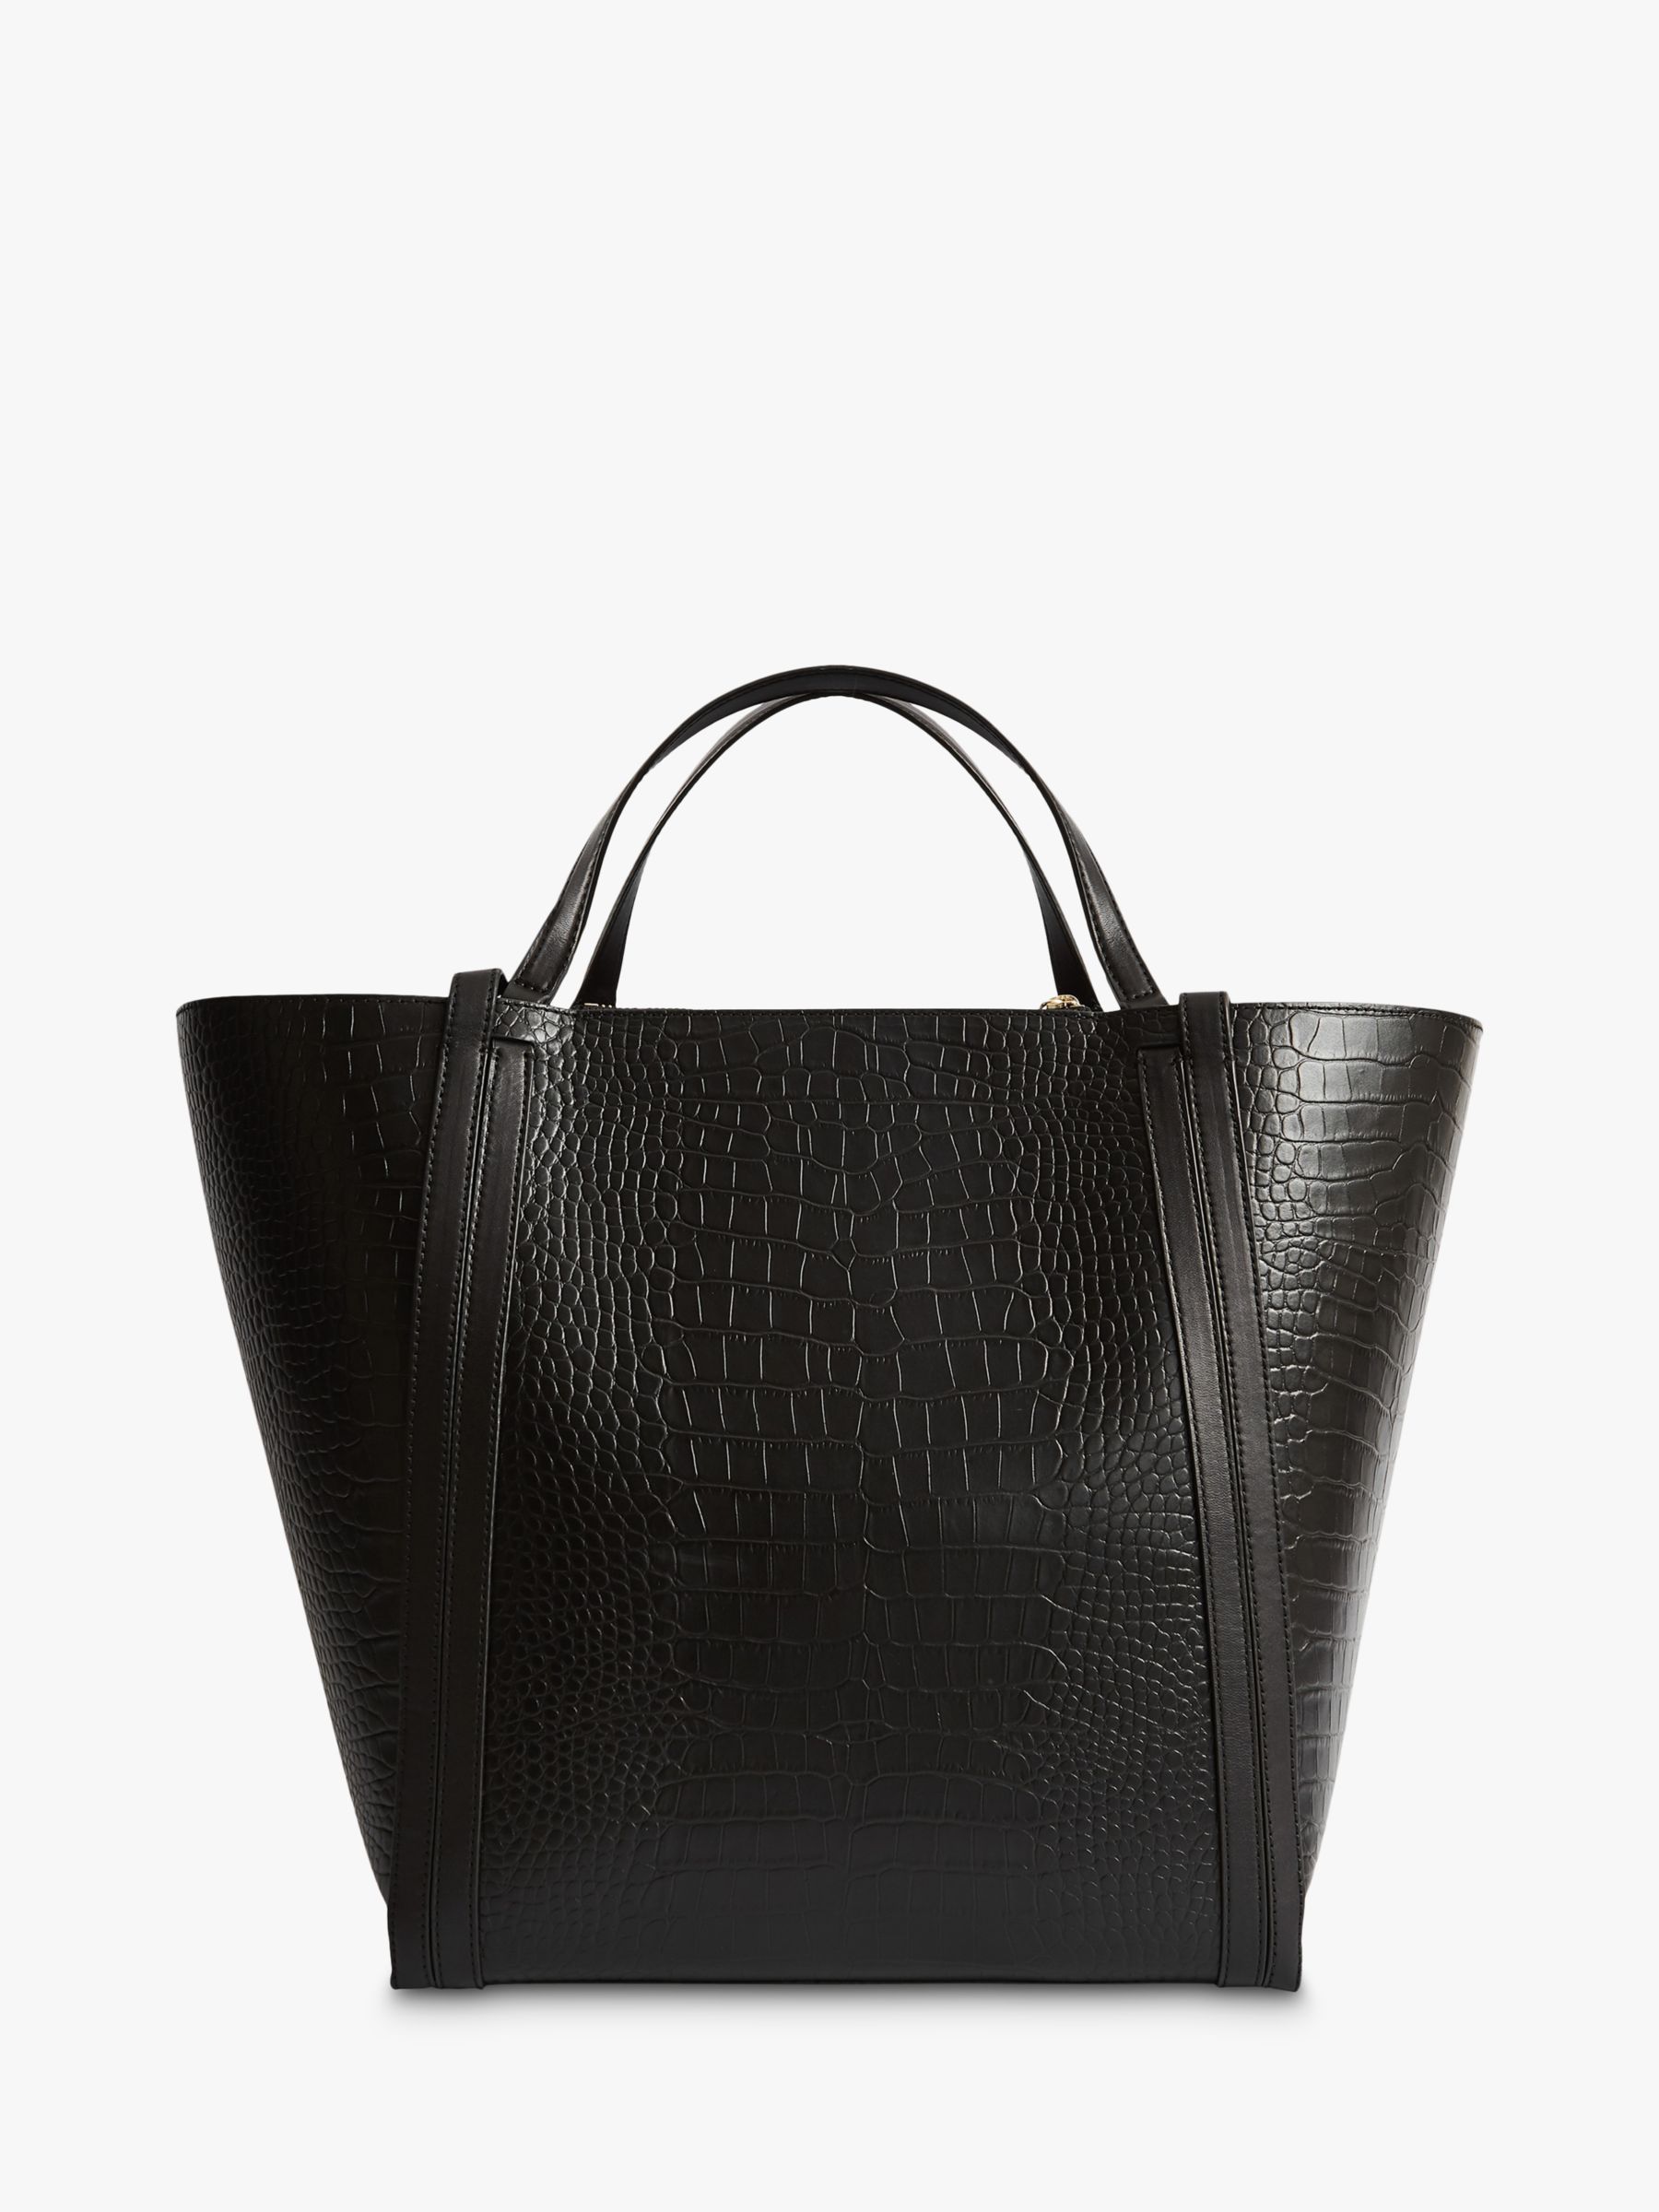 Reiss Allegra Leather Tote Bag, Black